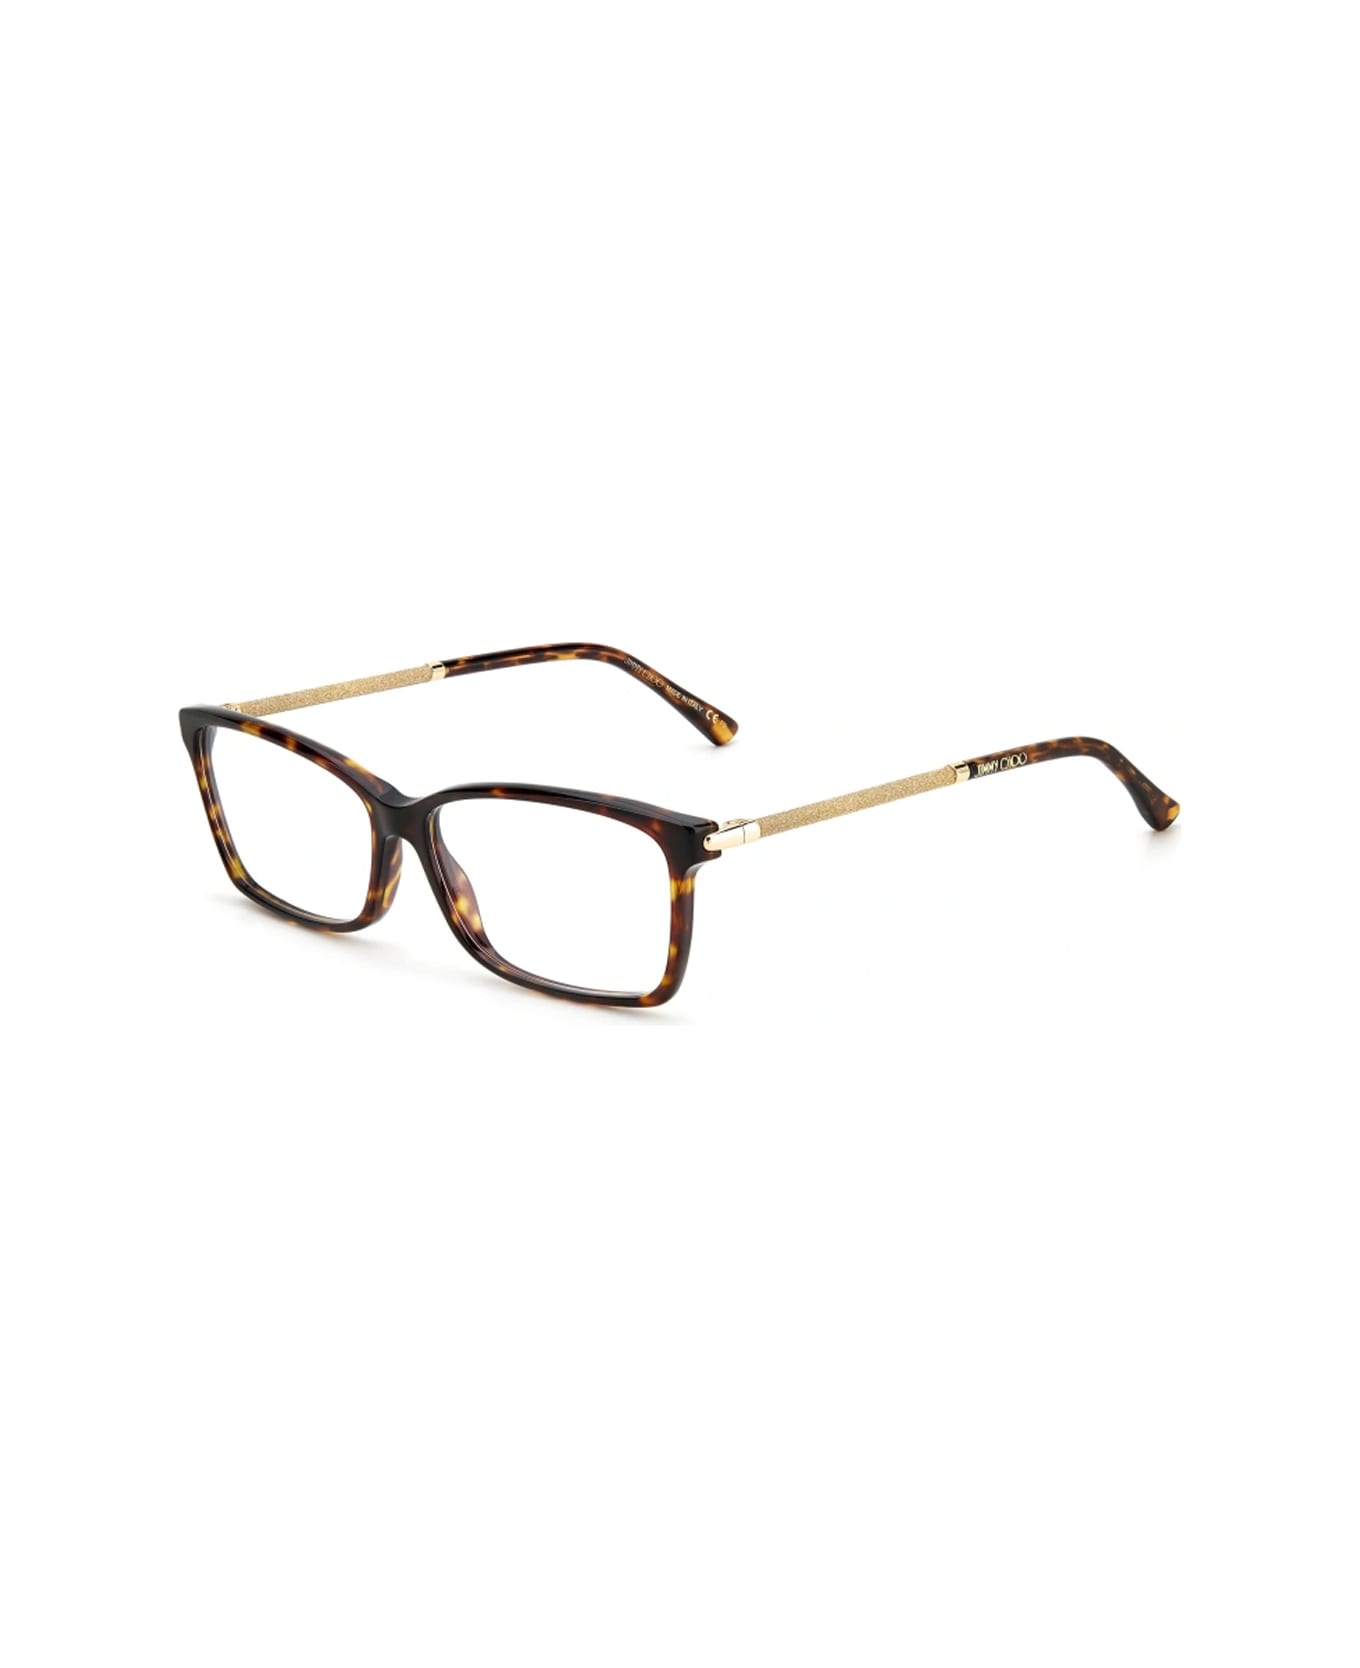 Jimmy Choo Eyewear Jc332 086/14 Havana Glasses - Marrone アイウェア